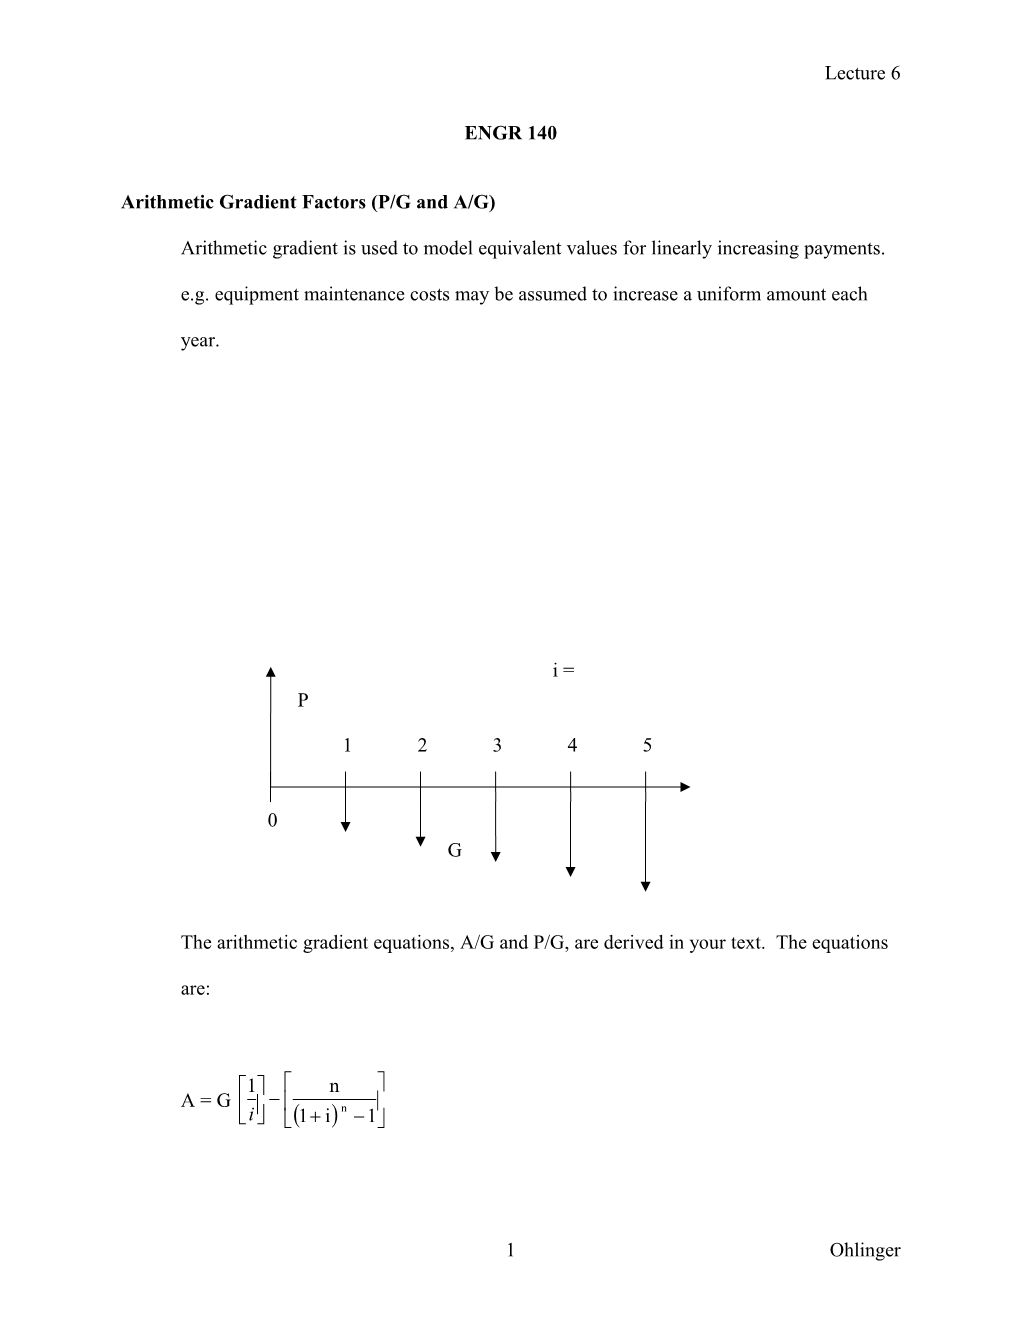 Arithmetic Gradient Factors (P/G and A/G)